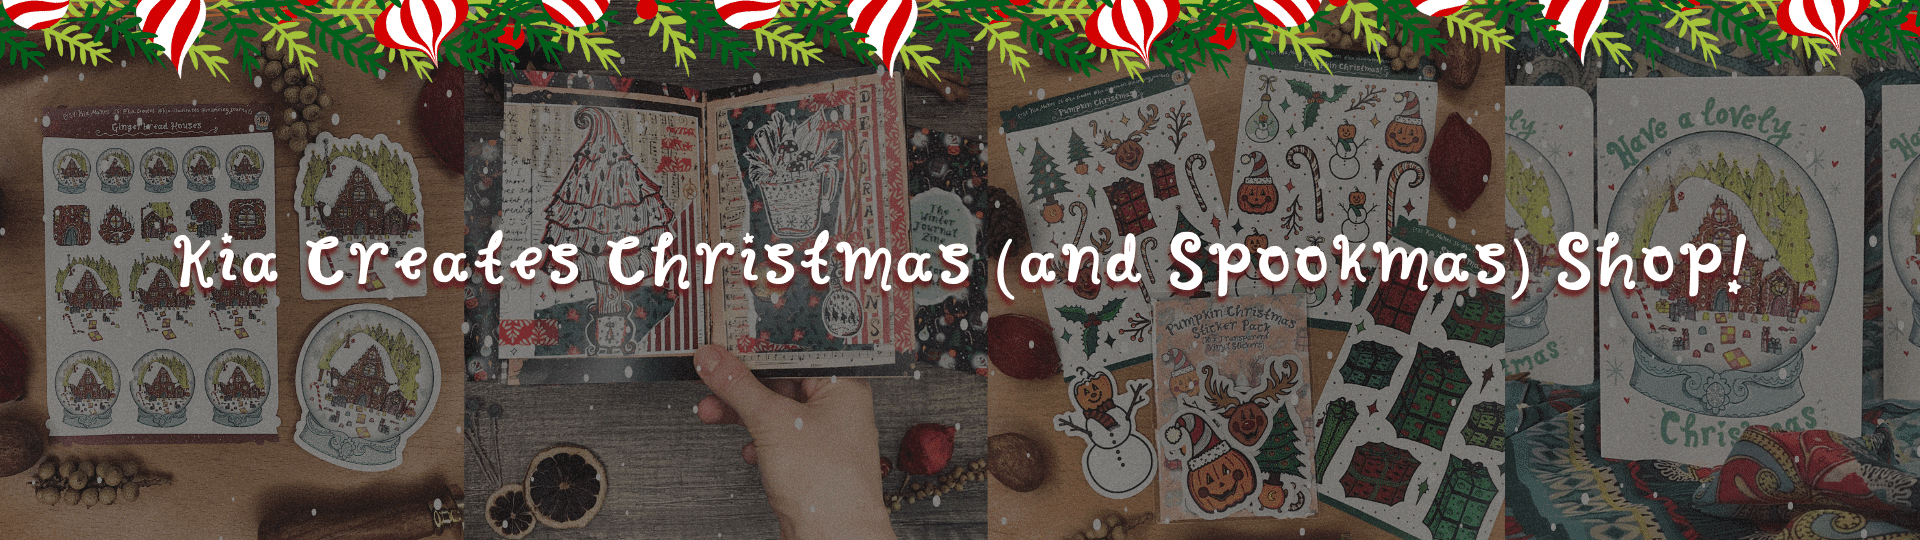 Kia Creates Christmas (and Spookmas) Shop